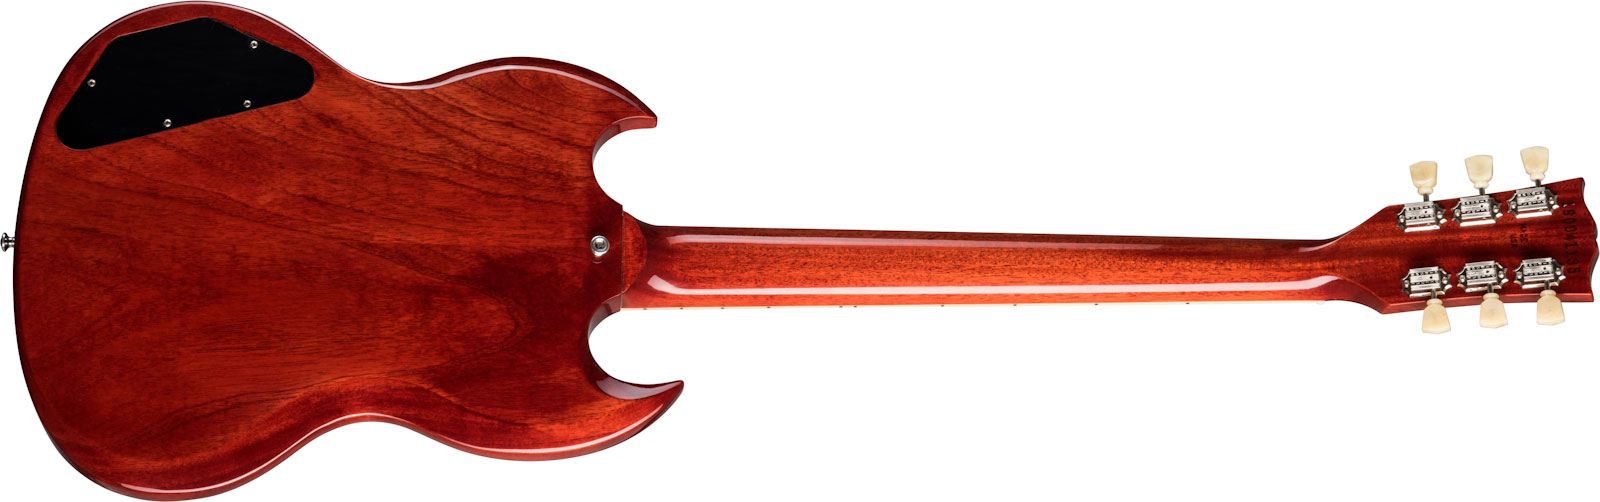 Gibson Sg Standard '61 Sideways Vibrola Original 2h Ht Rw - Vintage Cherry - Guitarra electrica retro rock - Variation 1